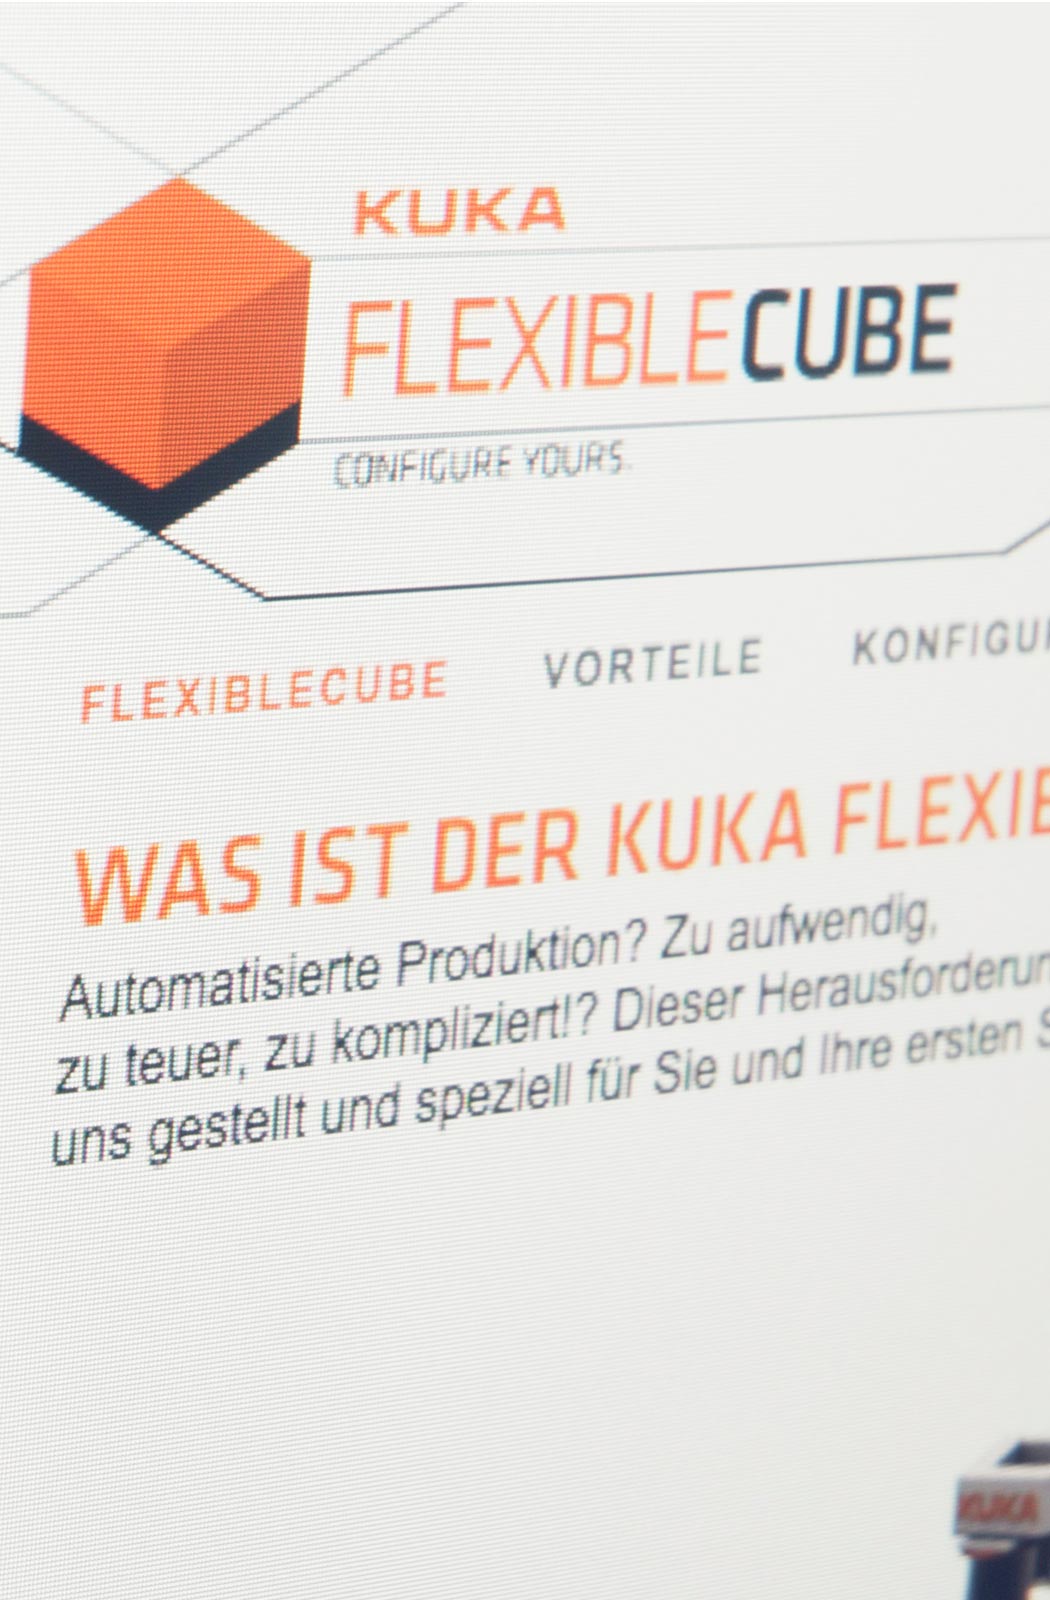 Flexible Cube Microsite